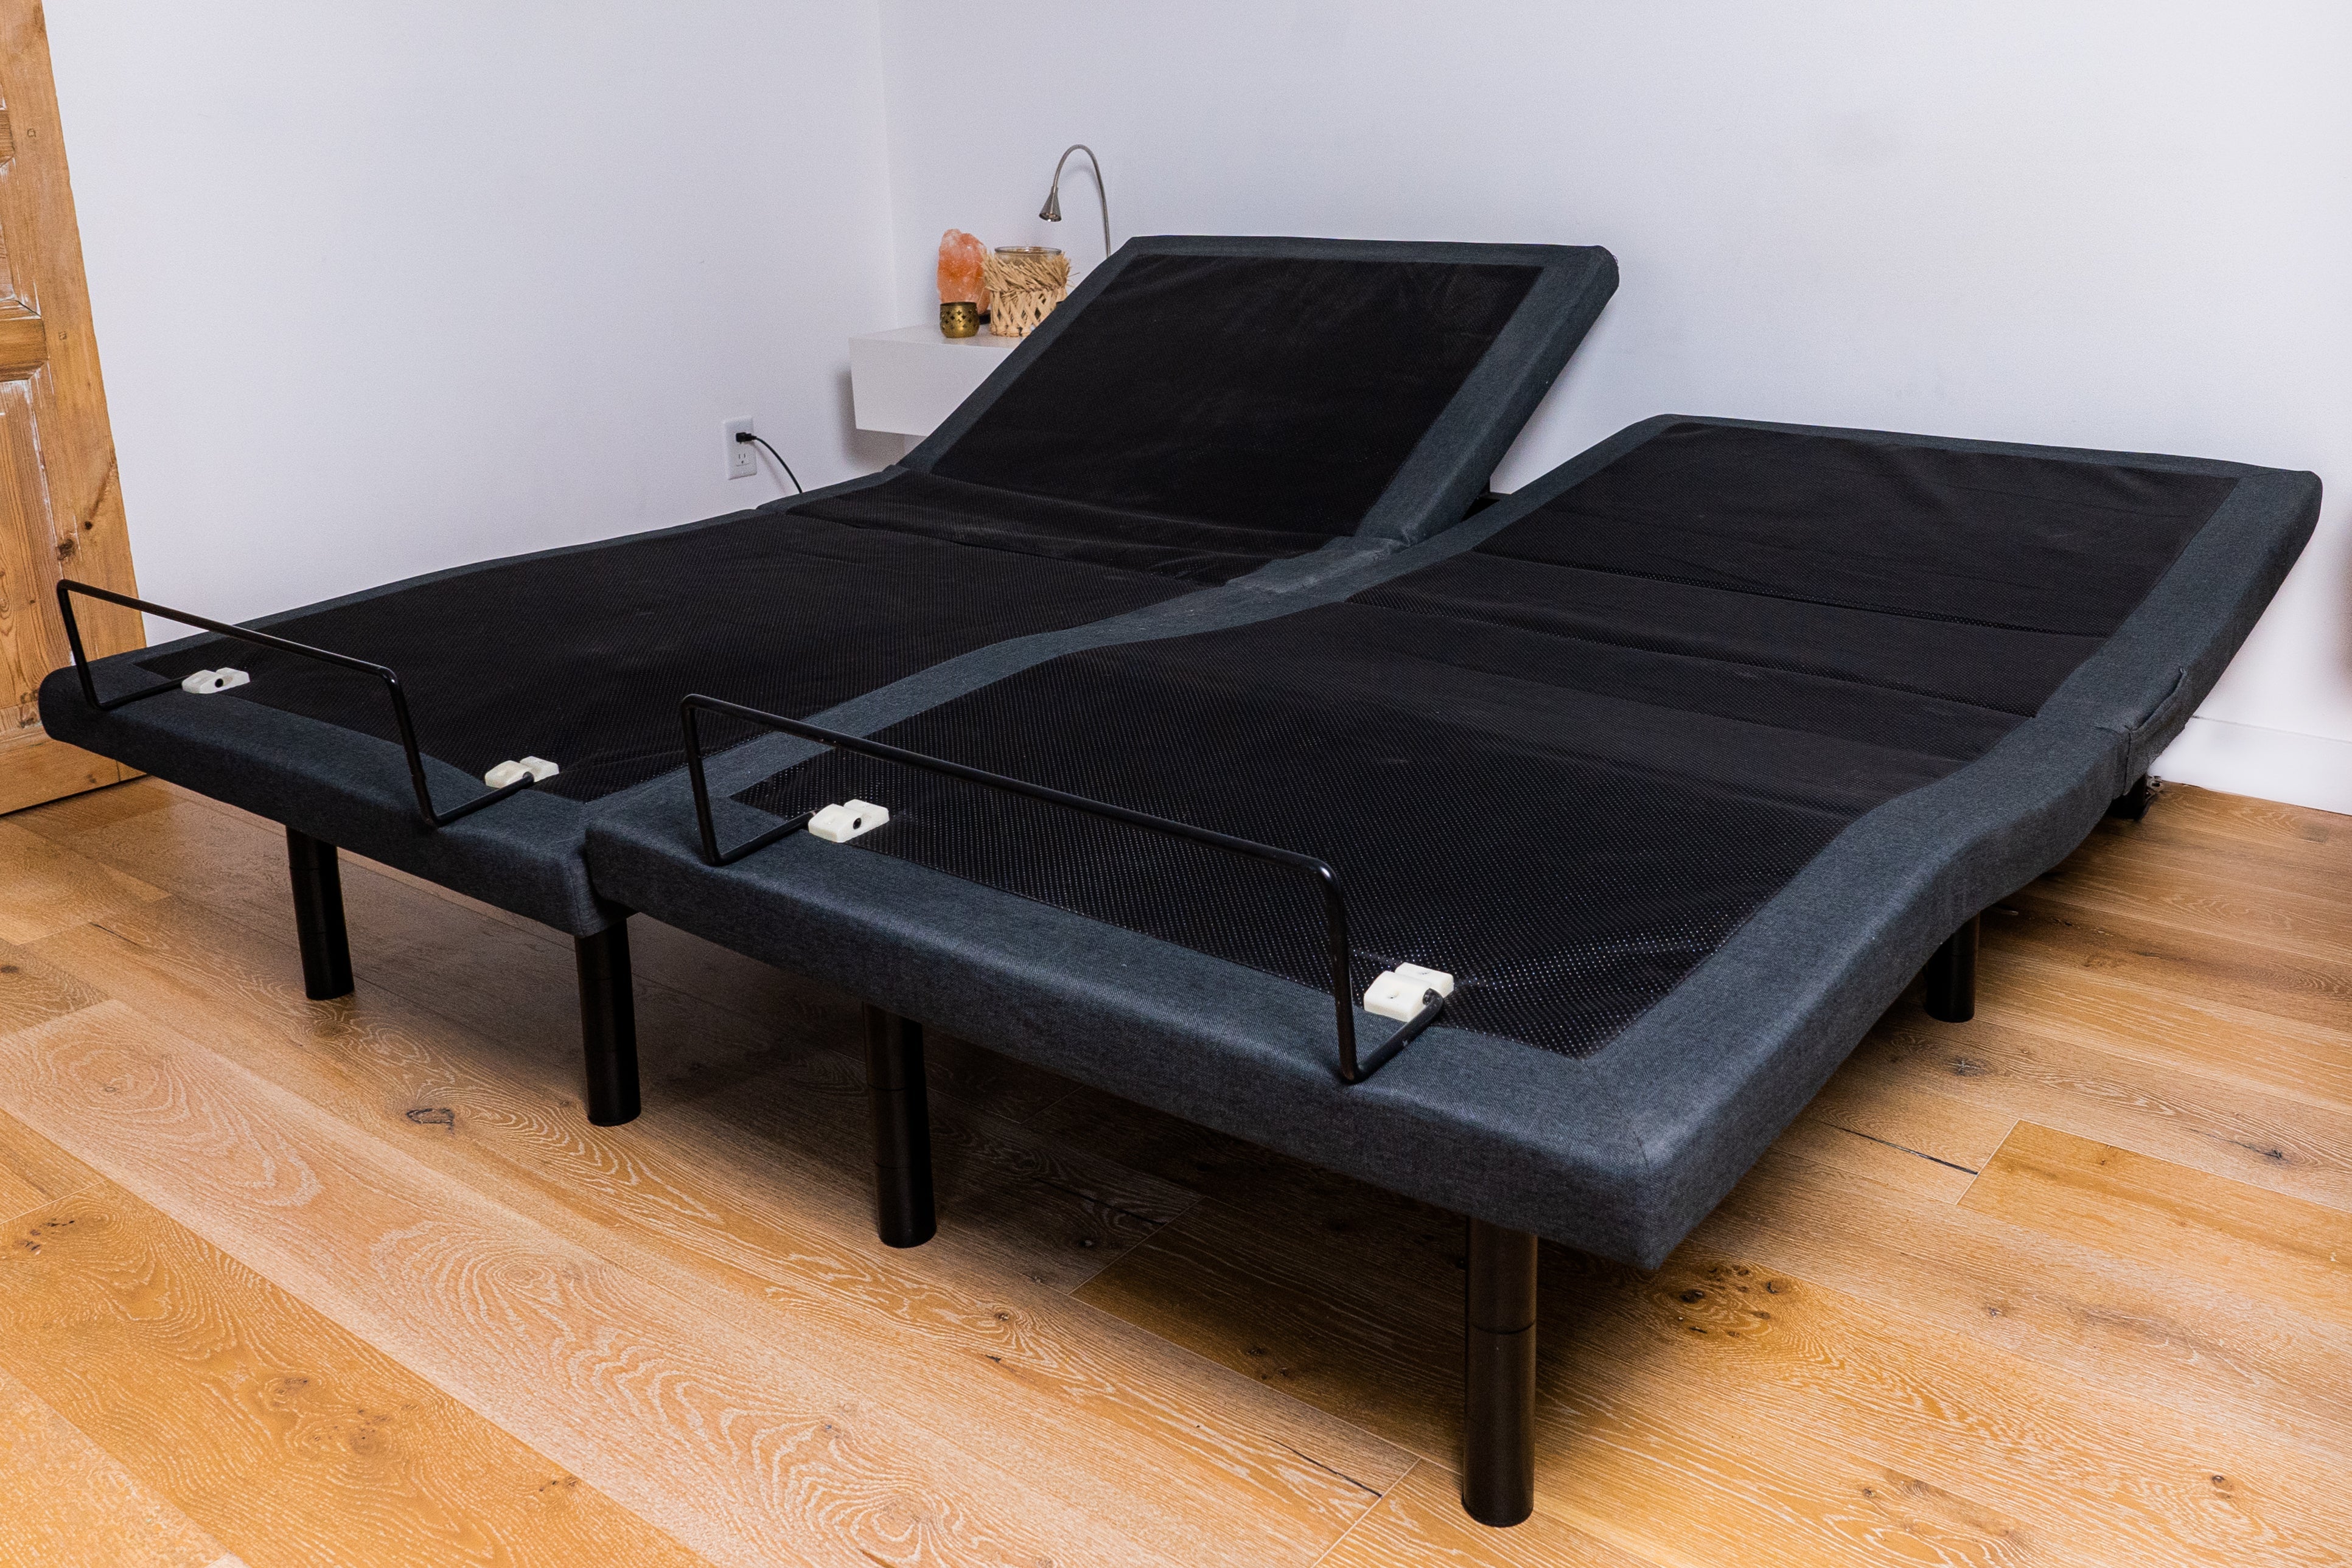 2023 Stock The Ultimate Beautyrest Split King Adjustable Bed